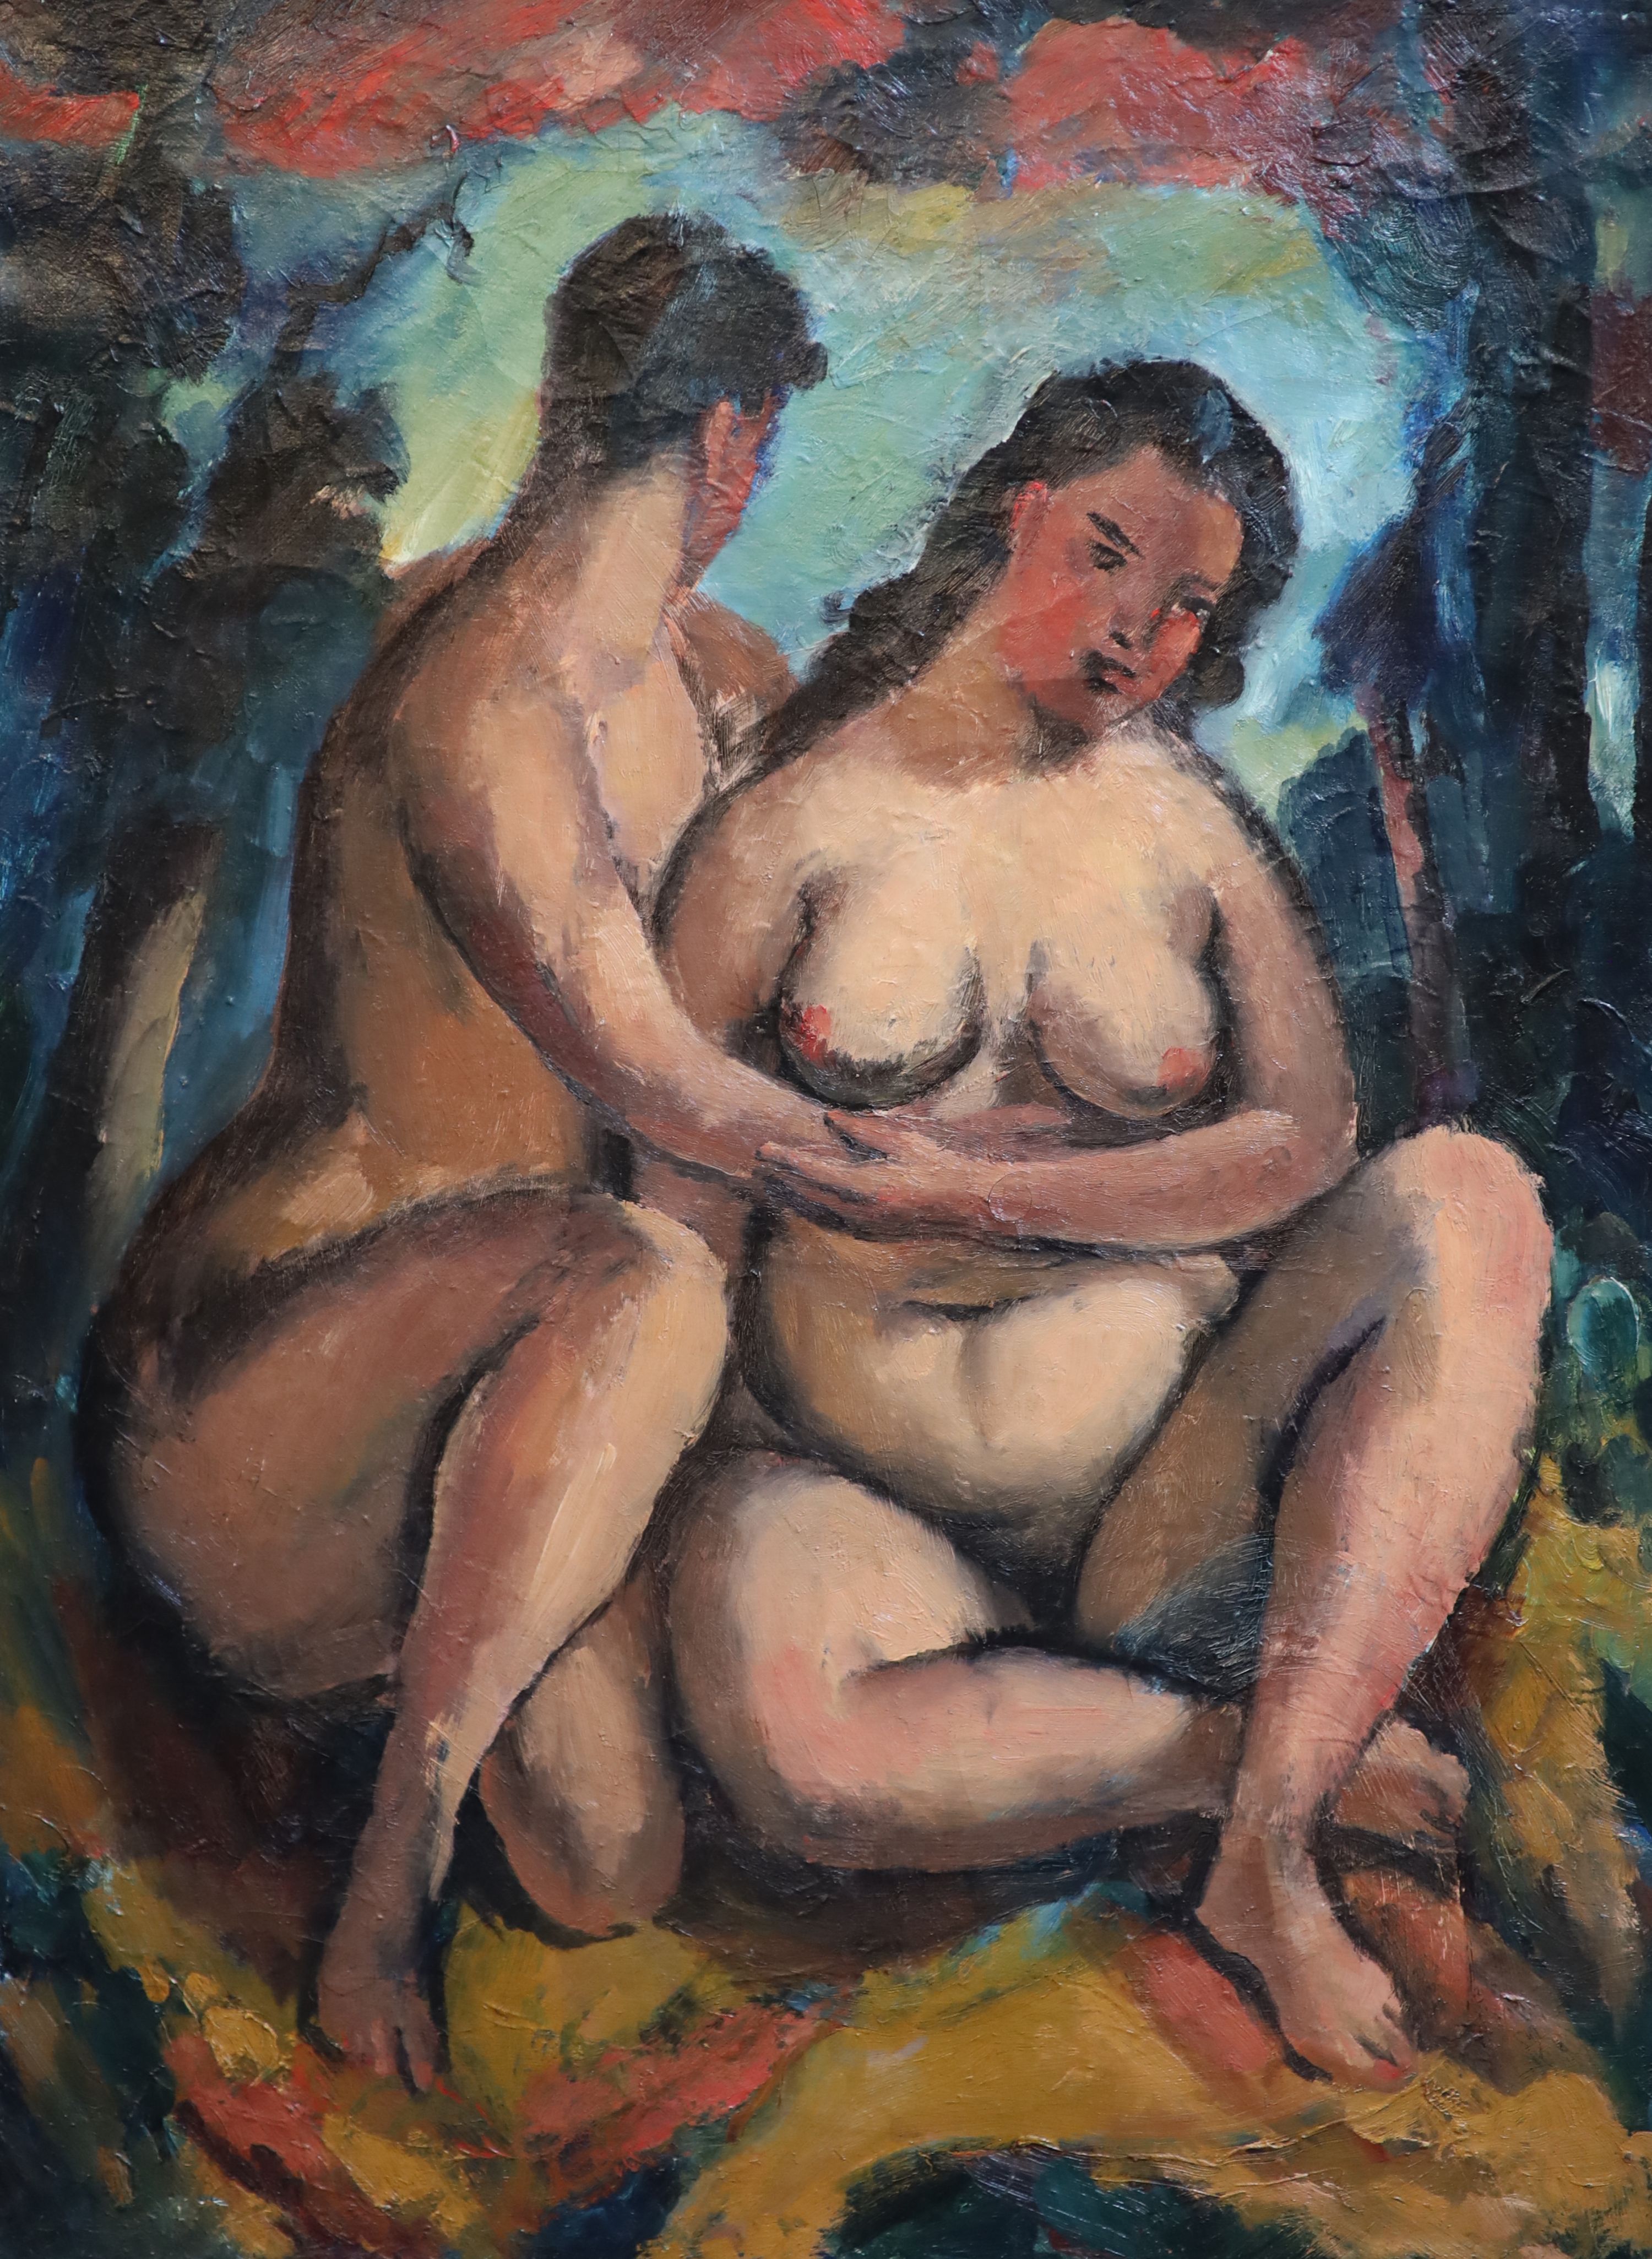 Robert Baker (1902-1992), Nude couple in a landscape, Oil on canvas, 77 x 56 cm. unframed